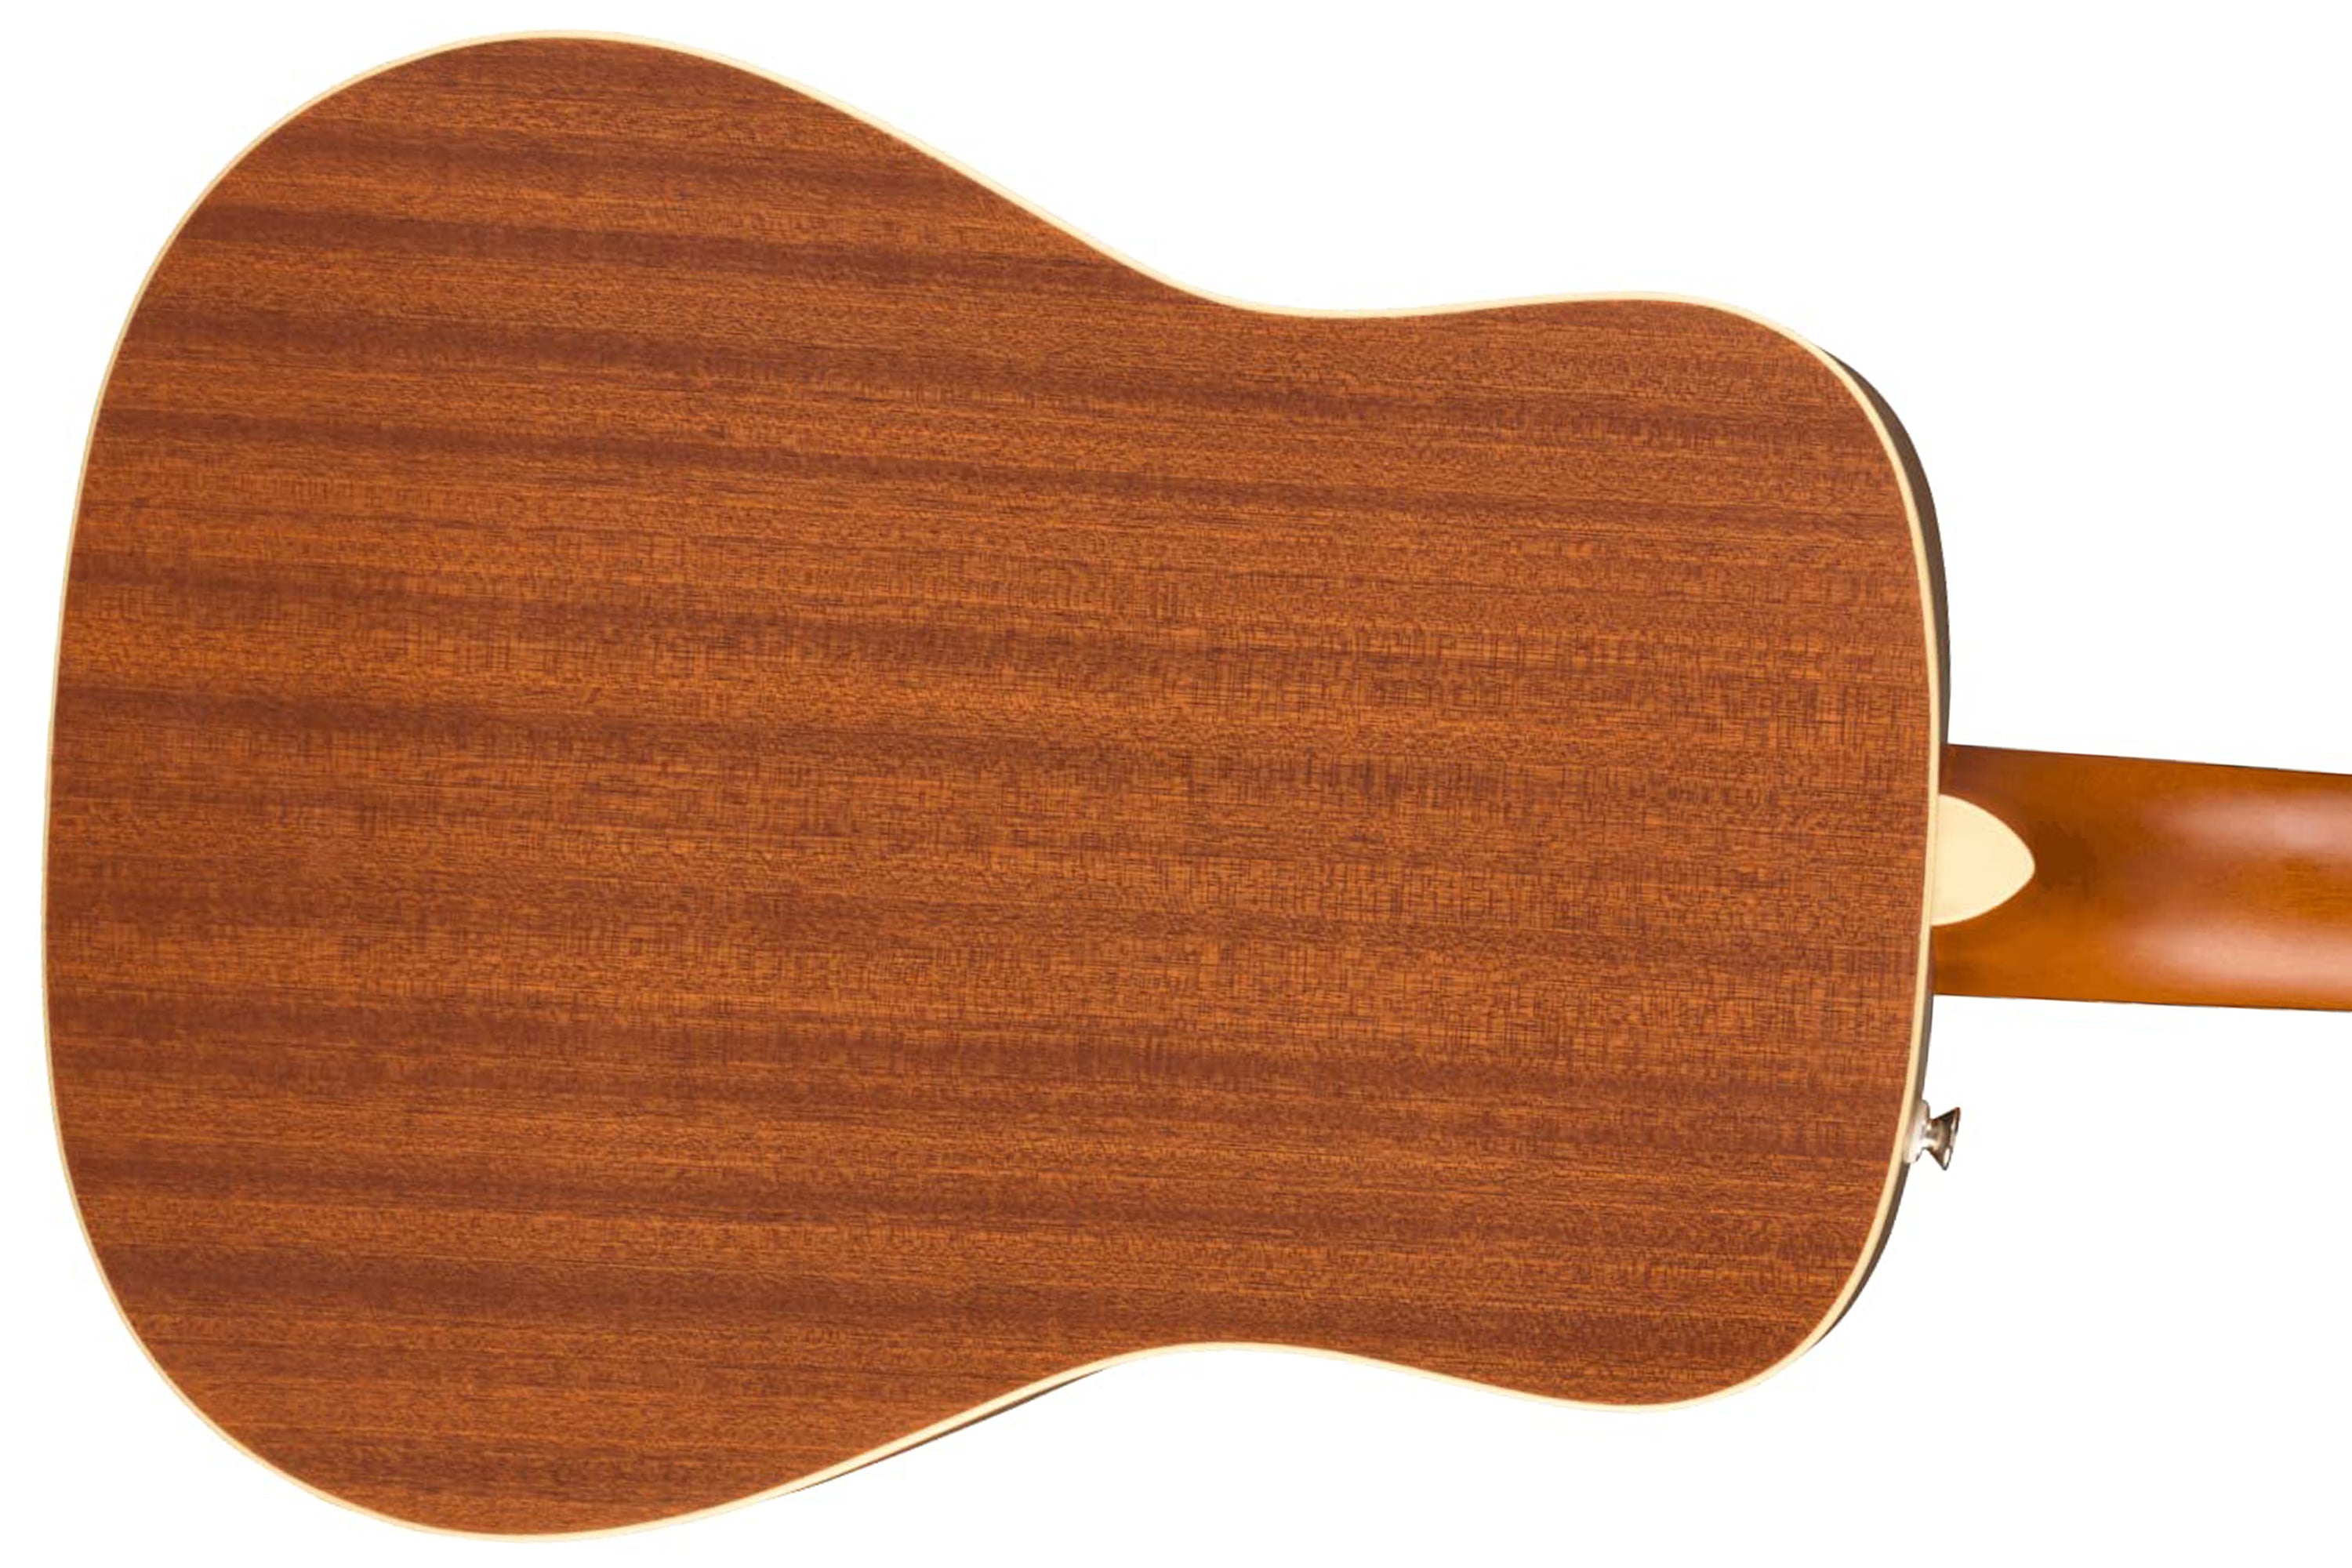 Fender Redondo Mini Acoustic Guitar With Bag - Natural